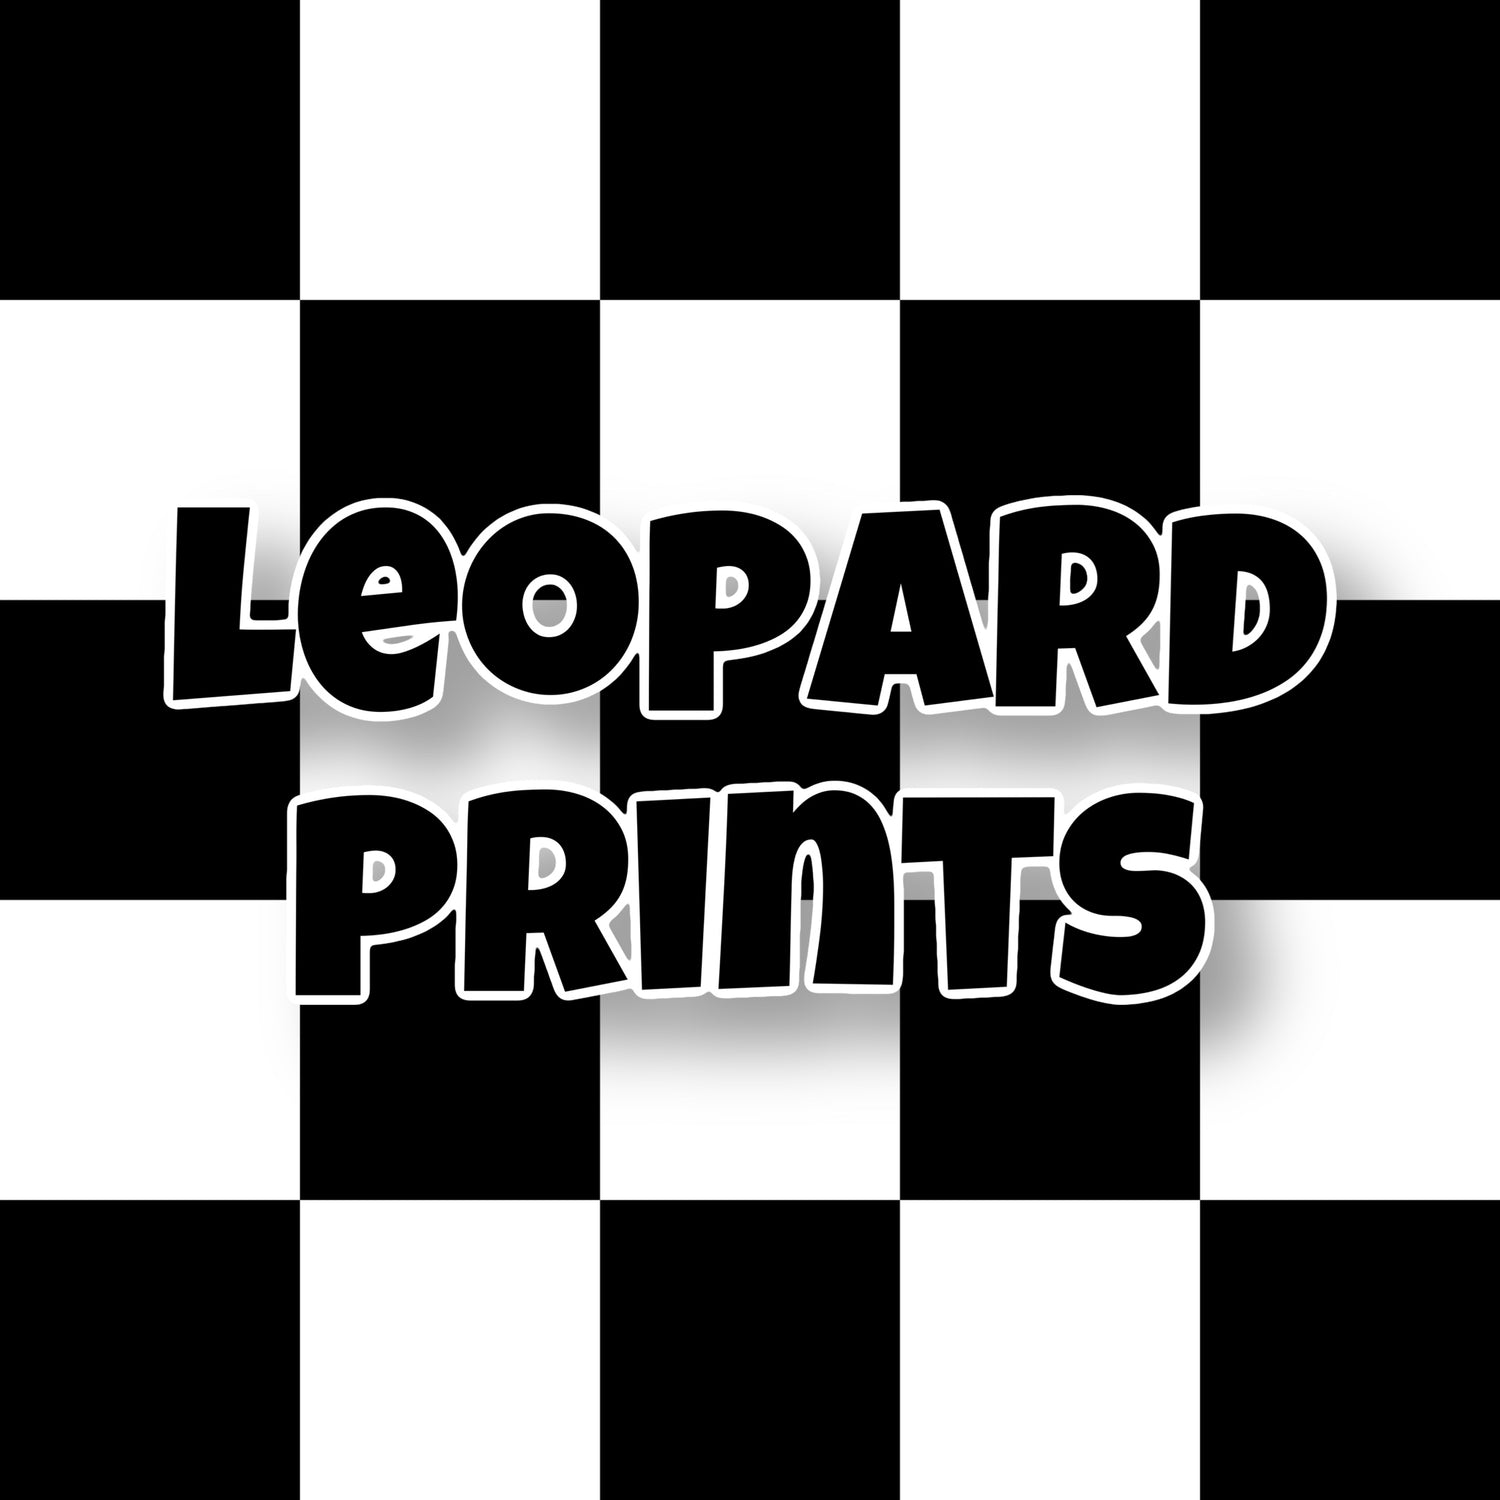 LEOPARD PRINTS